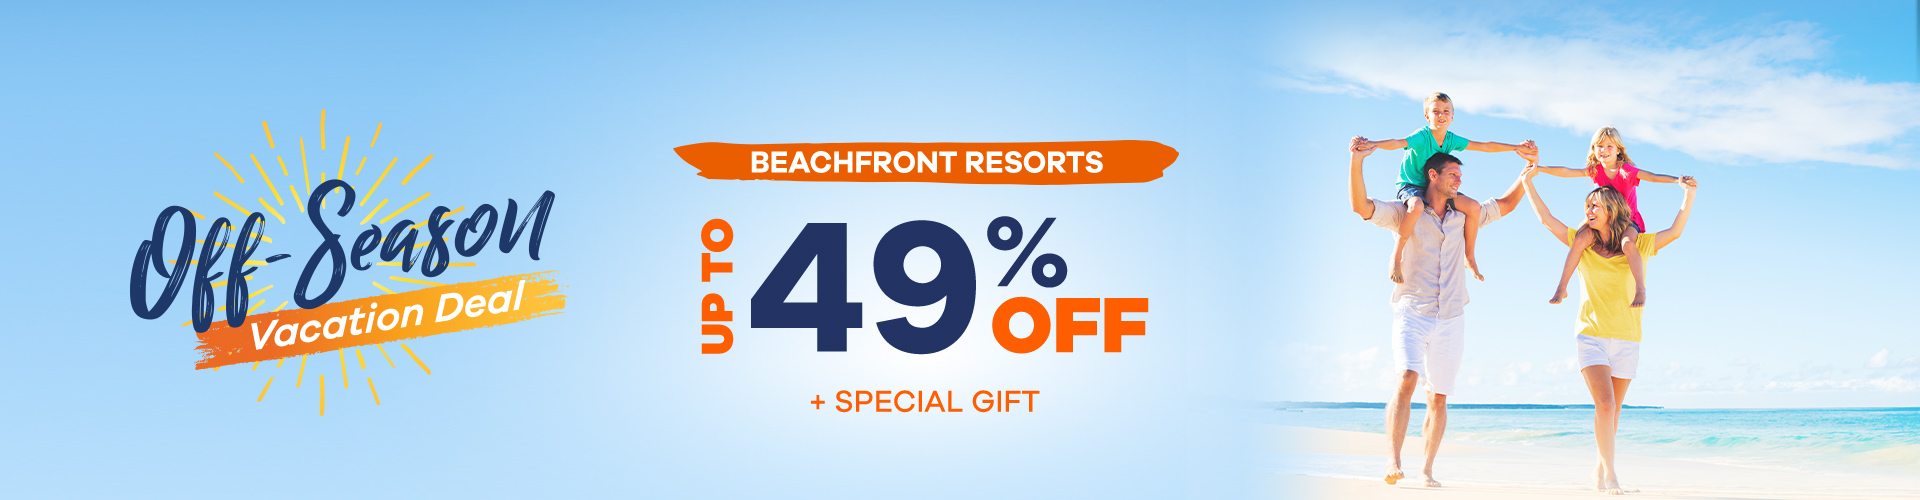 Beach vacations deals in Cancun & Riviera Maya